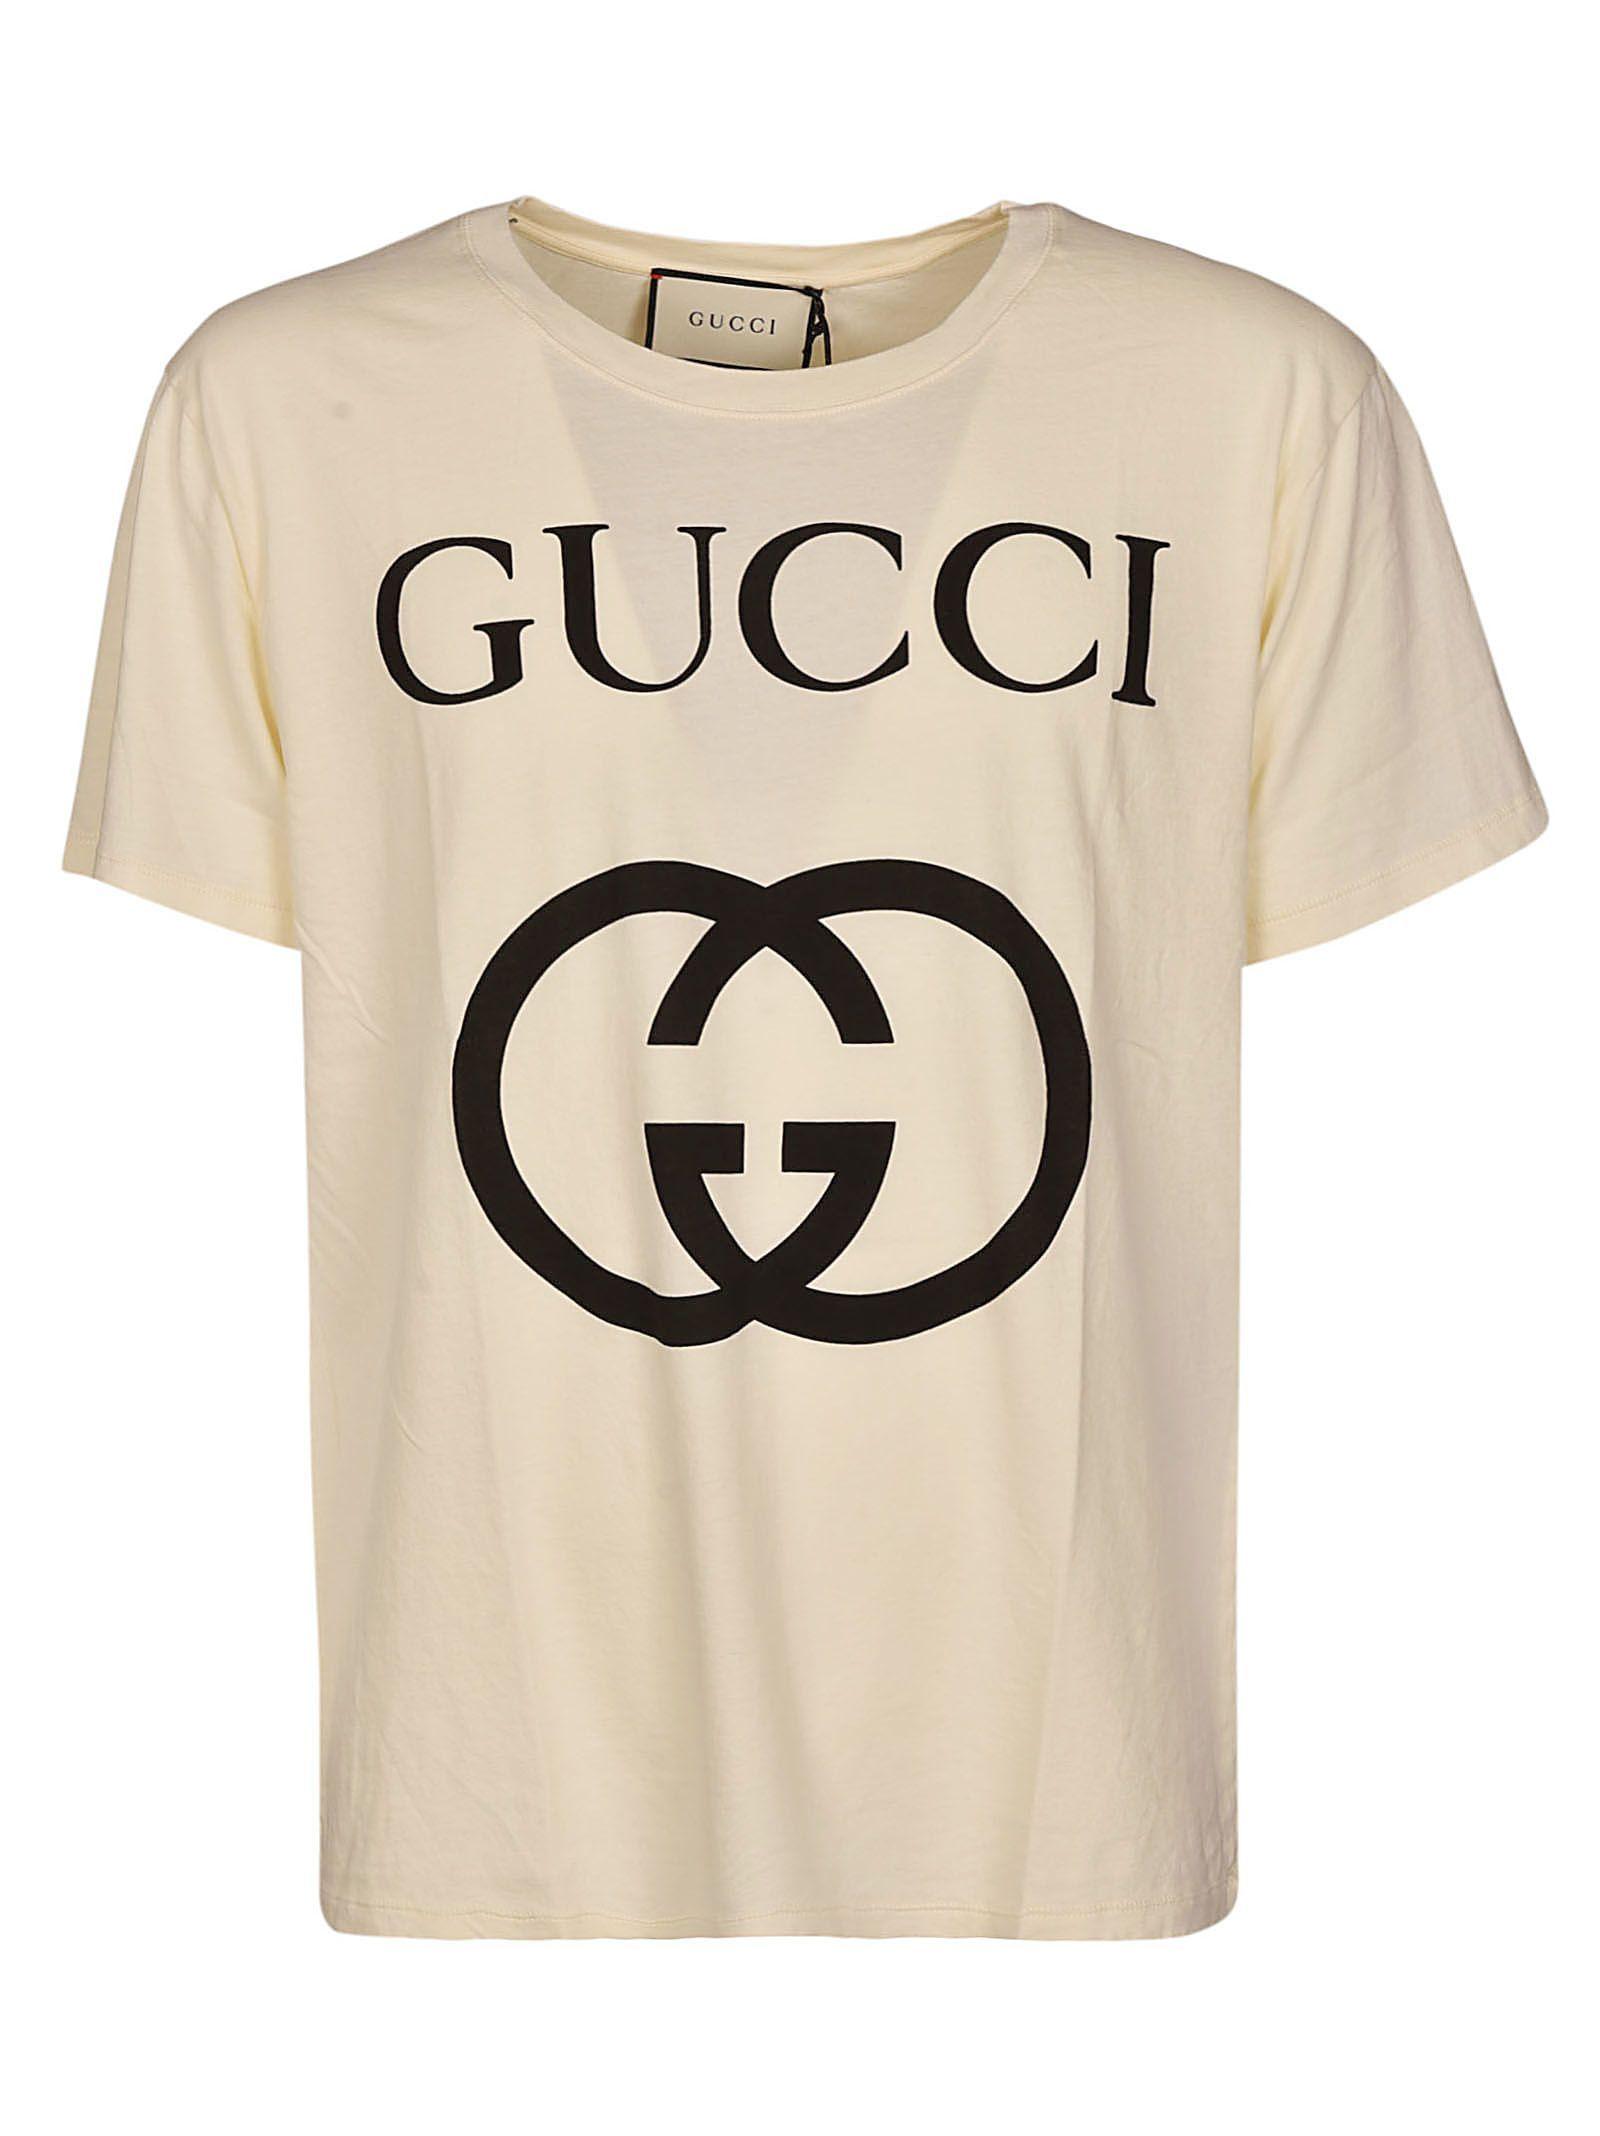 Gucci Clothing Logo - GUCCI LOGO T SHIRT. #gucci #cloth. Styles. Gucci